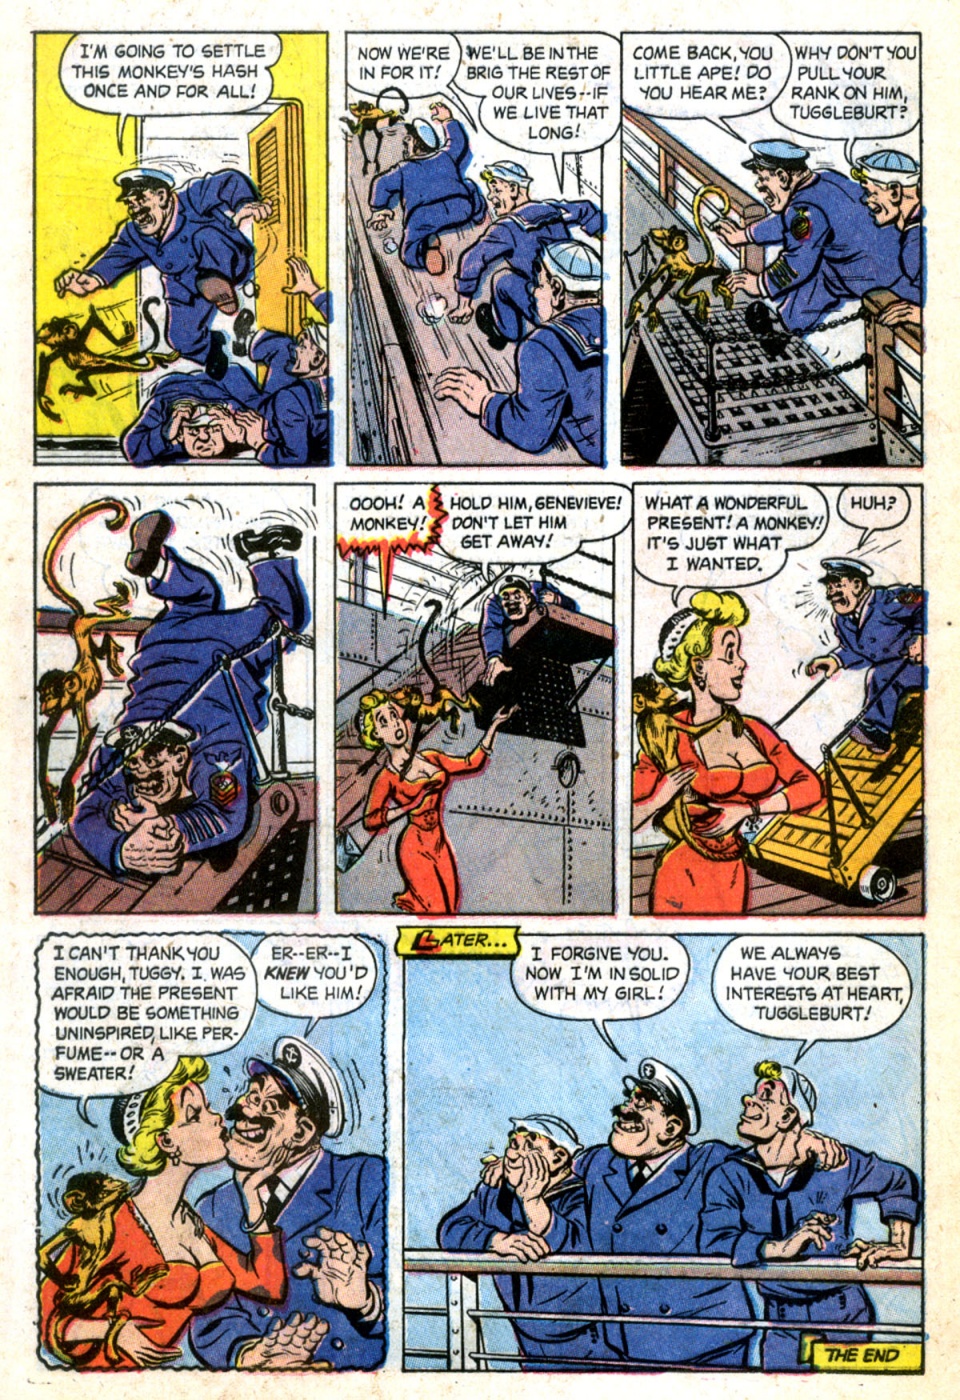 Anchors the Salt Water Daffy - Comics (c) (20)